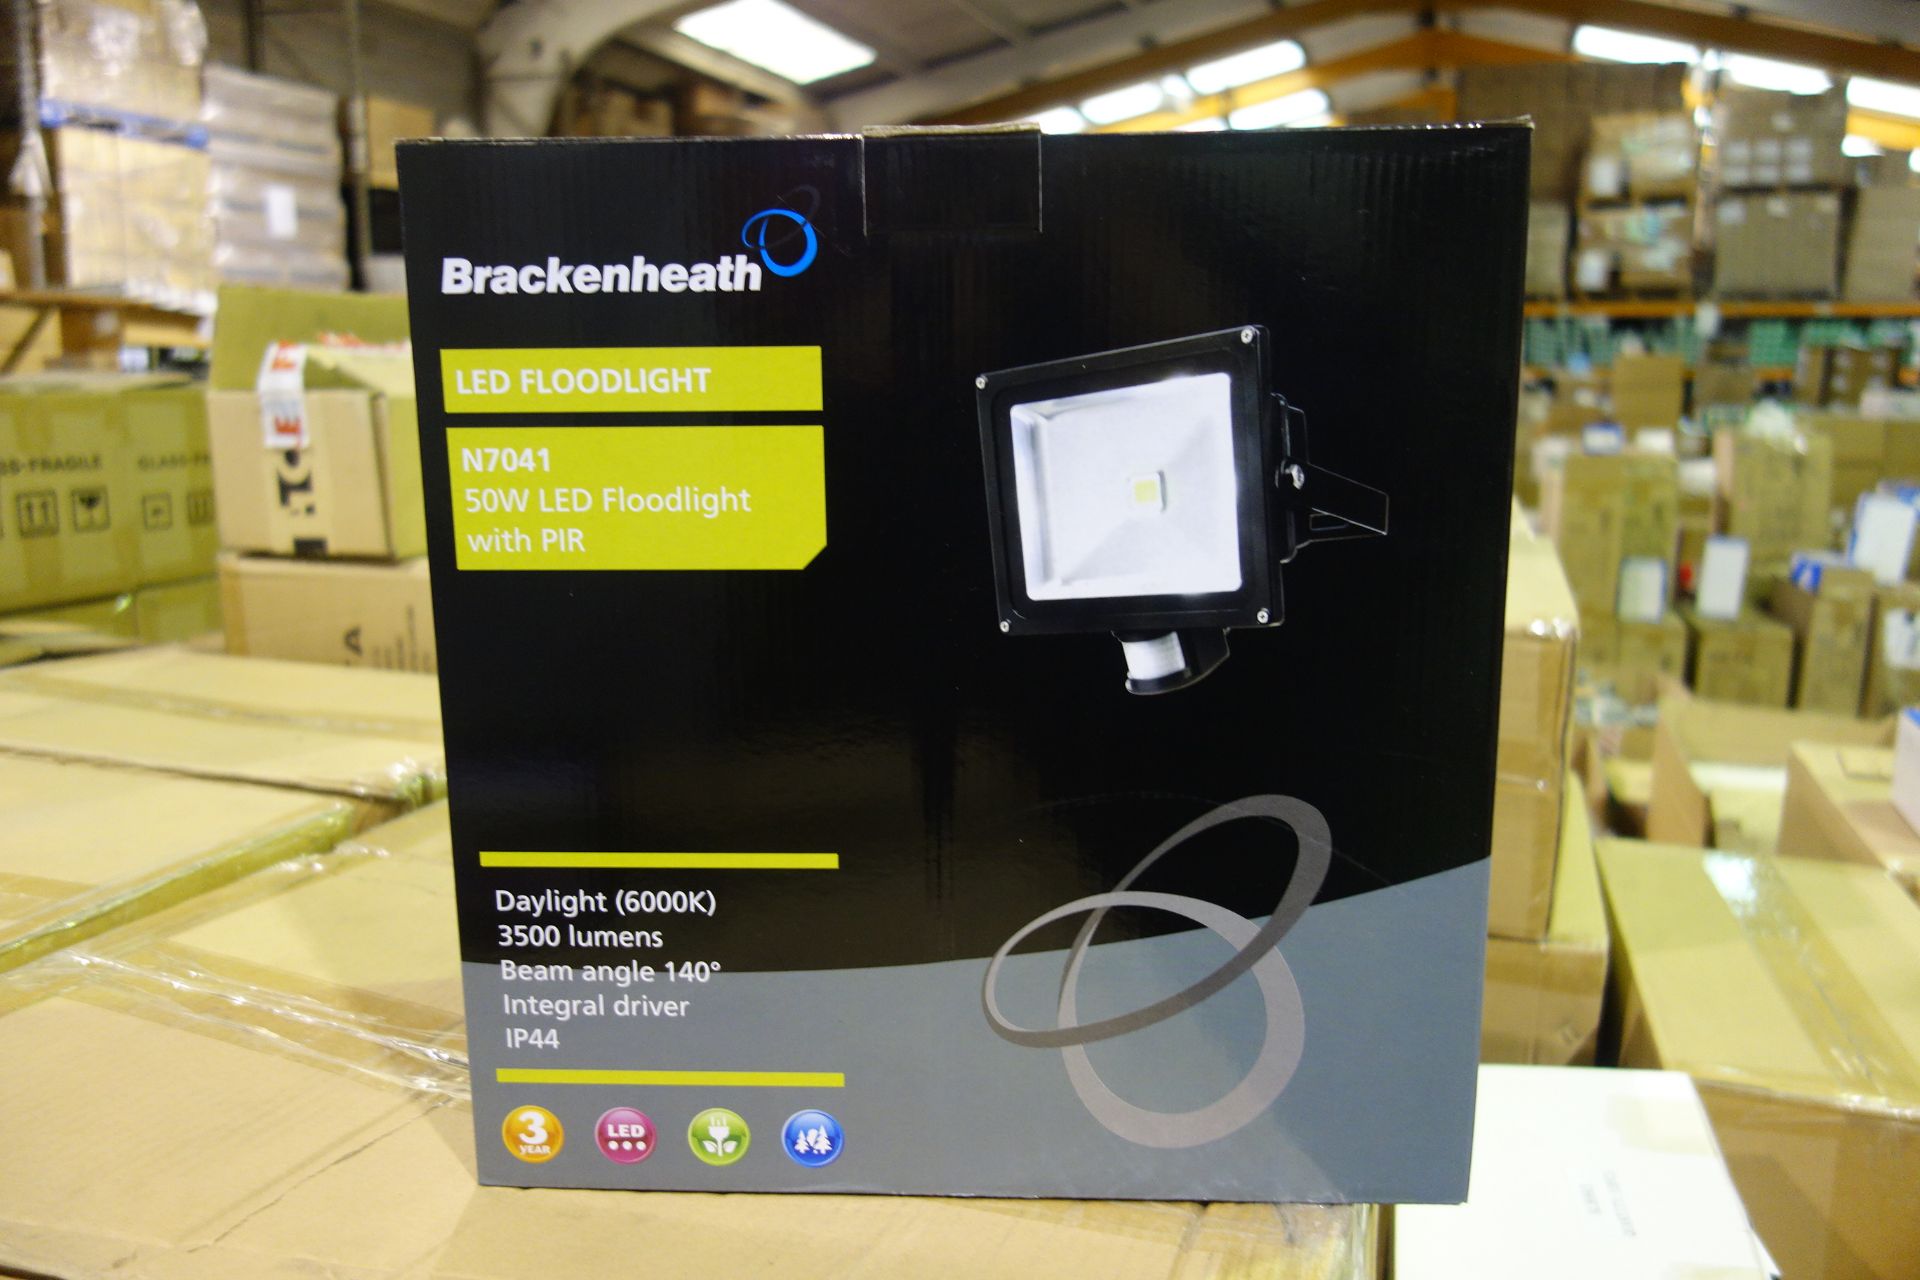 4 X Brakenheath N7041 50W LED Floodlight With PIR Daylight 6000K 1P44